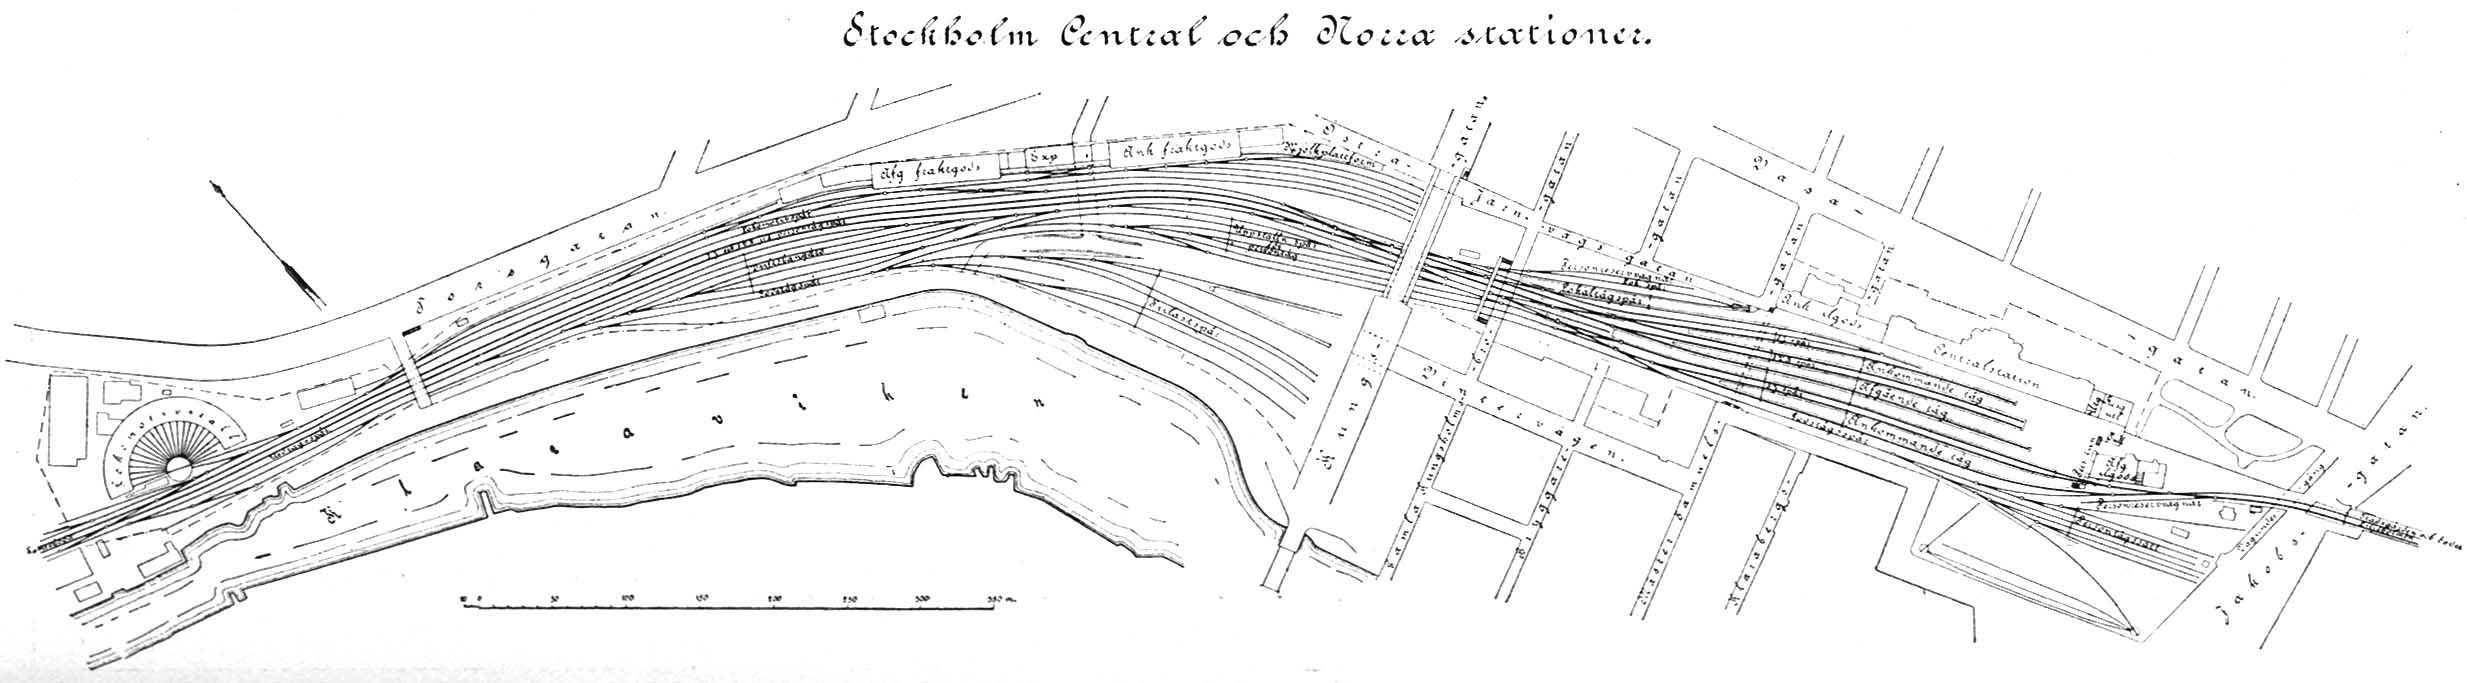 Stockholm rail-way yard 1906